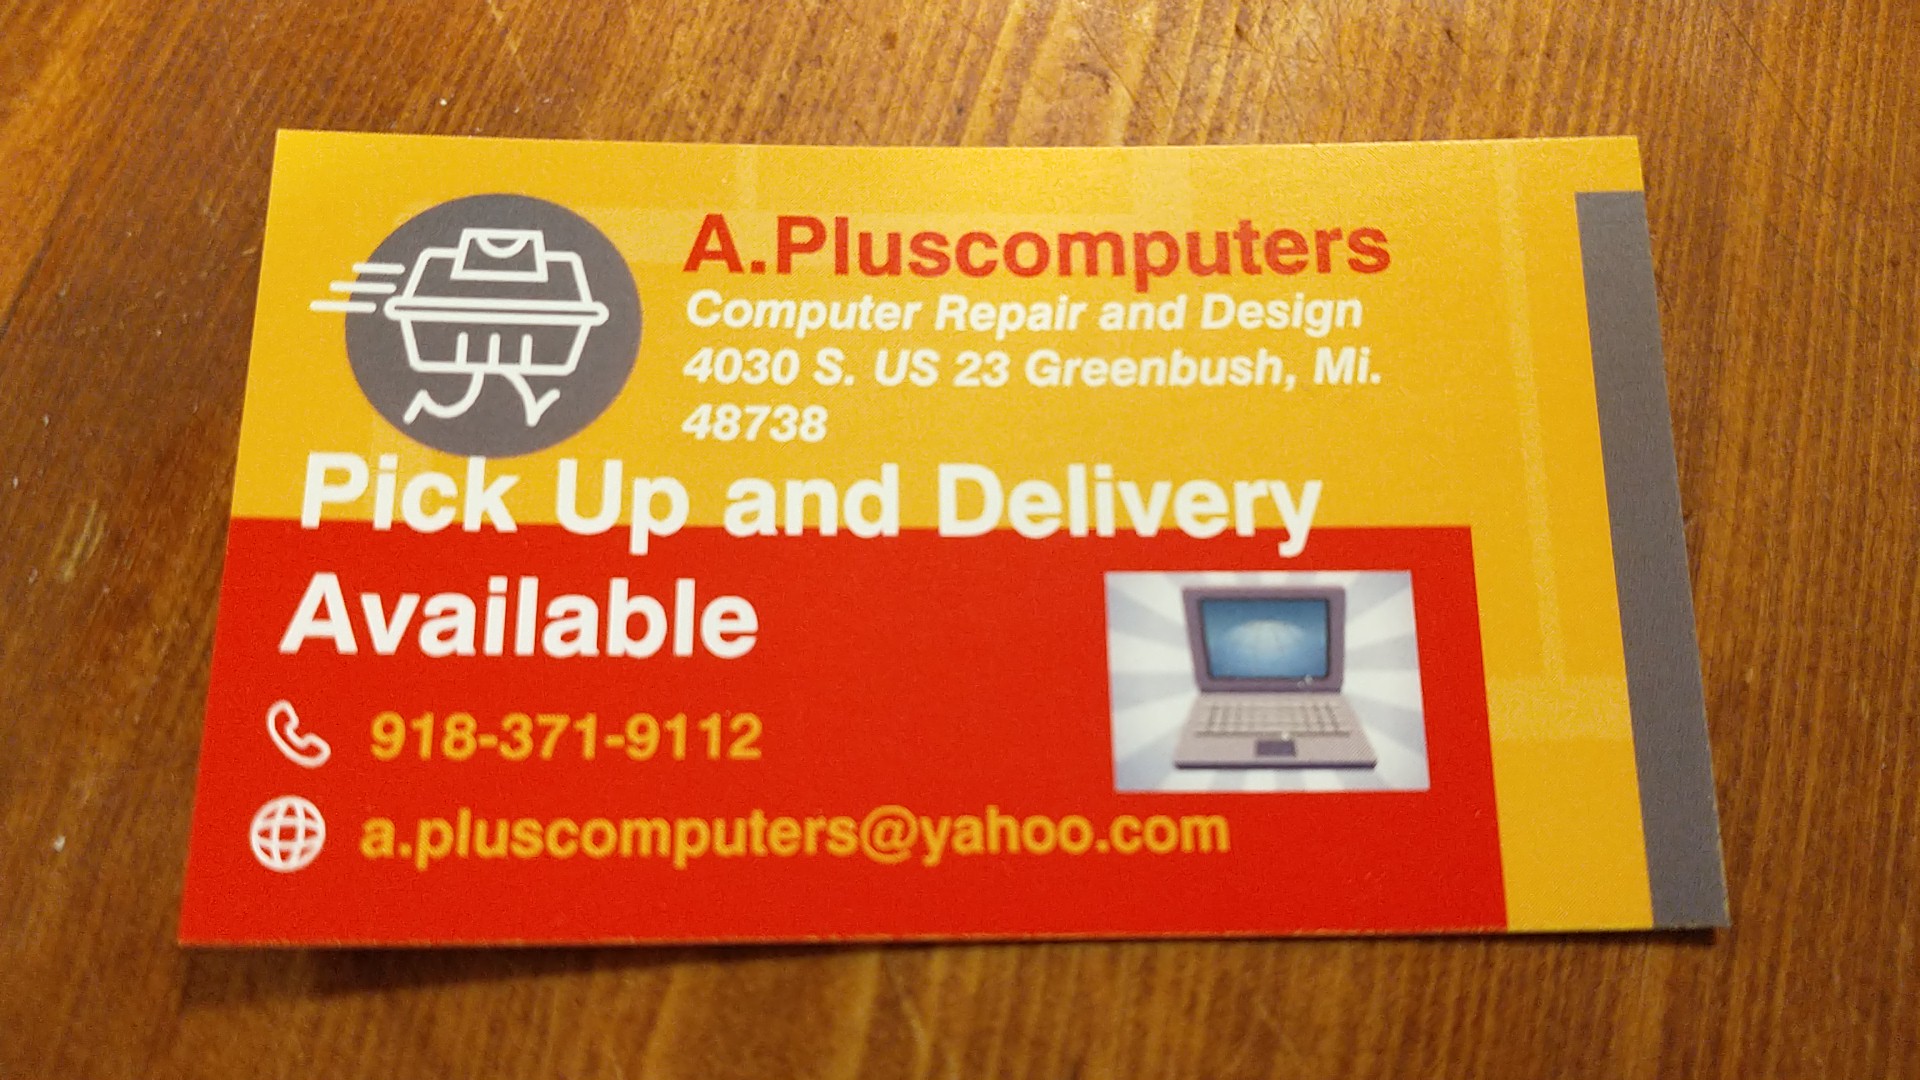 A Plus Computers 4030 S US-23, Greenbush Michigan 48738